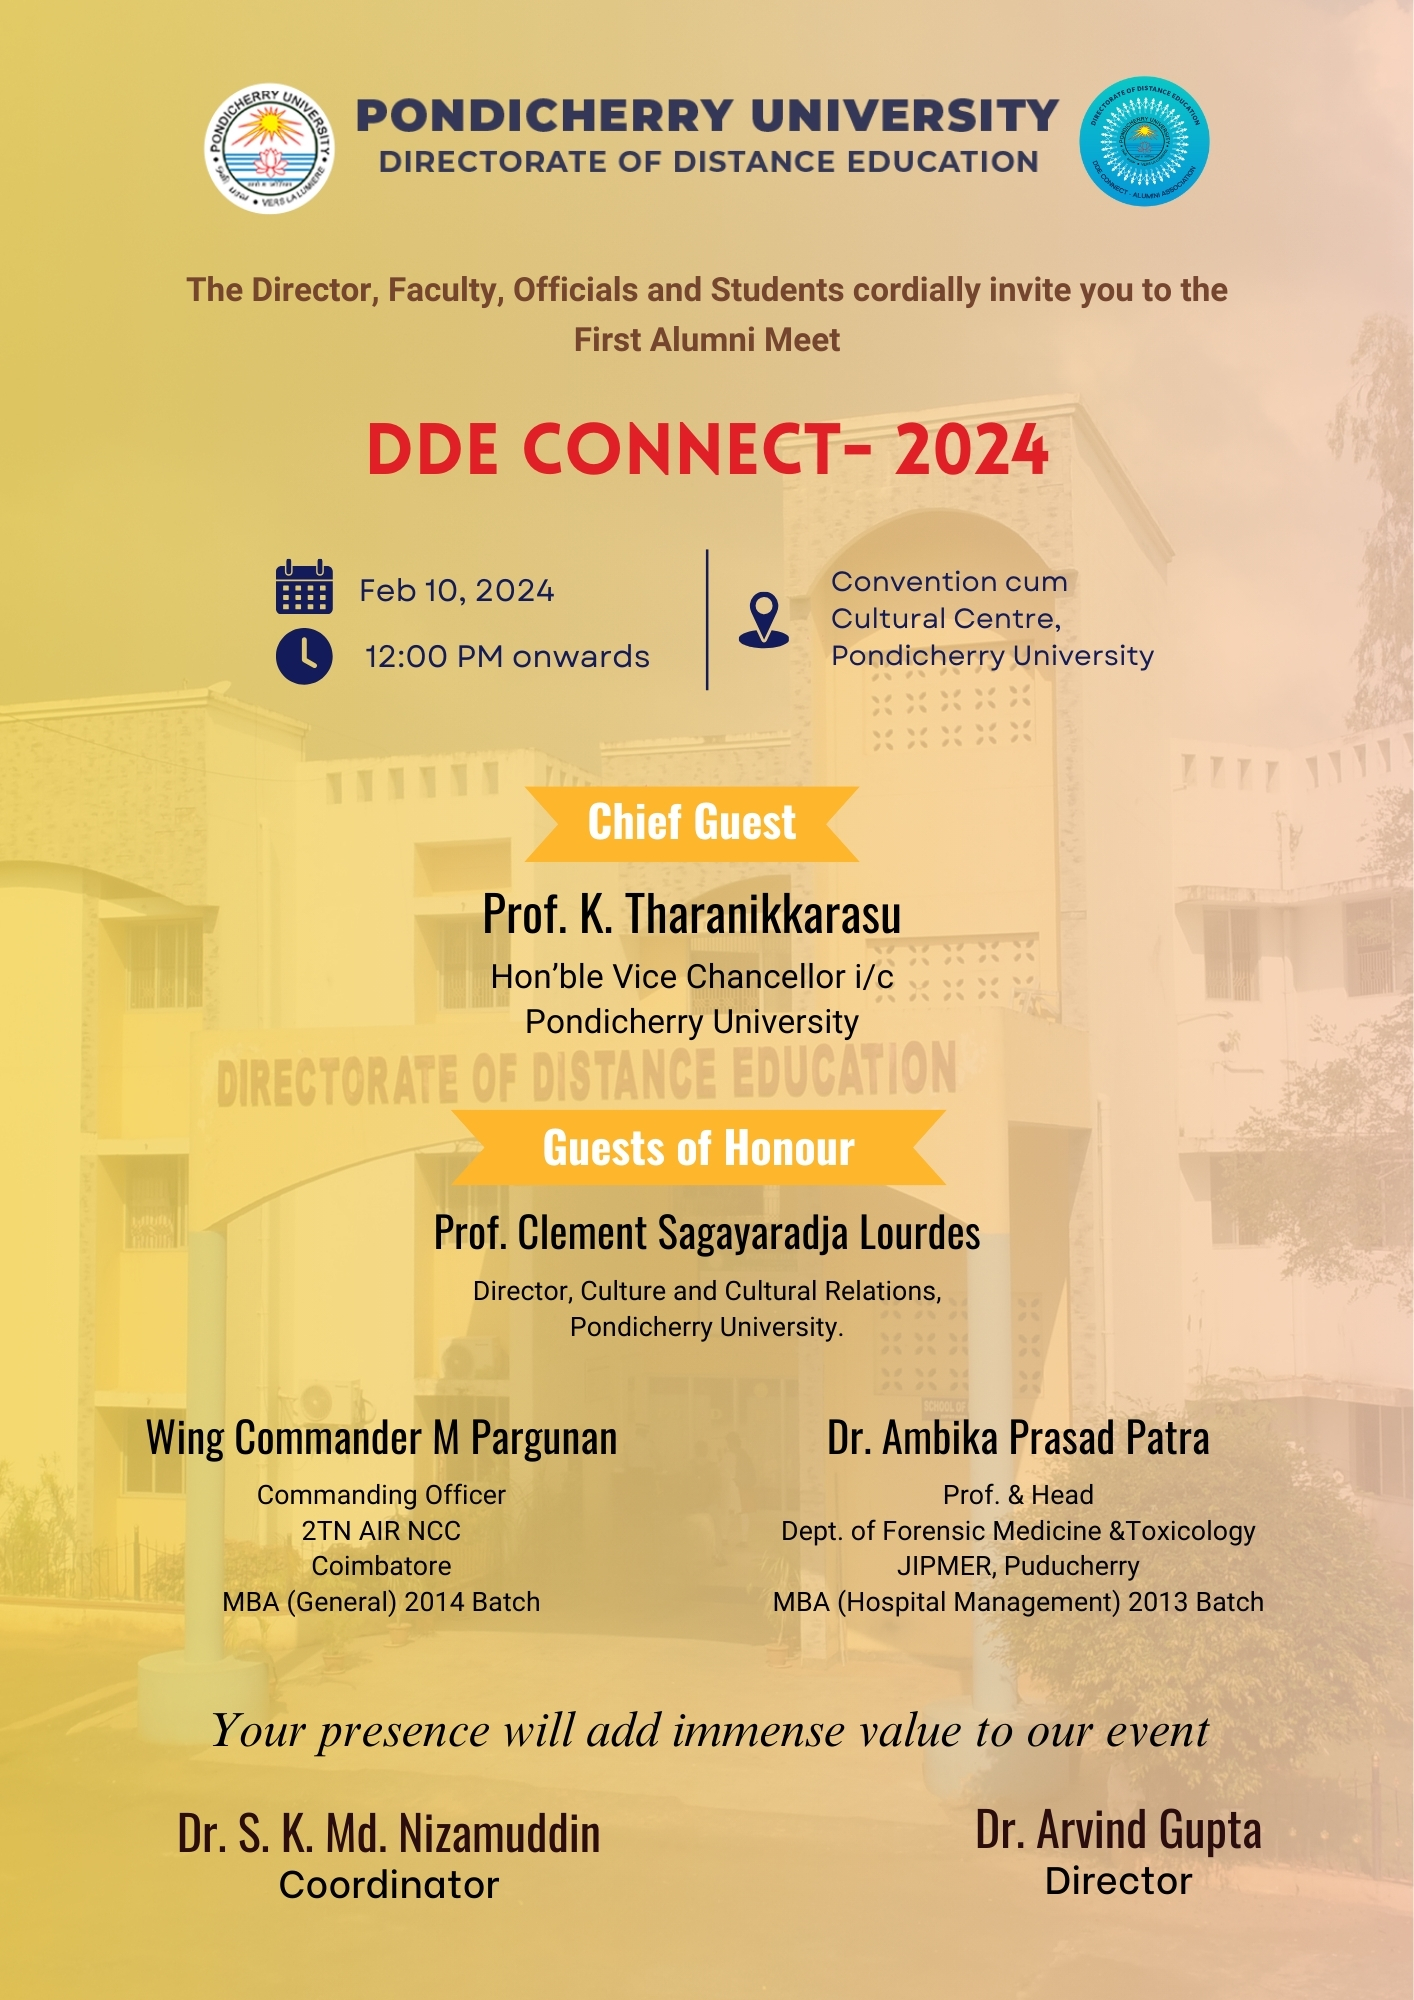 DDE CONNECT 2024 PUDDE